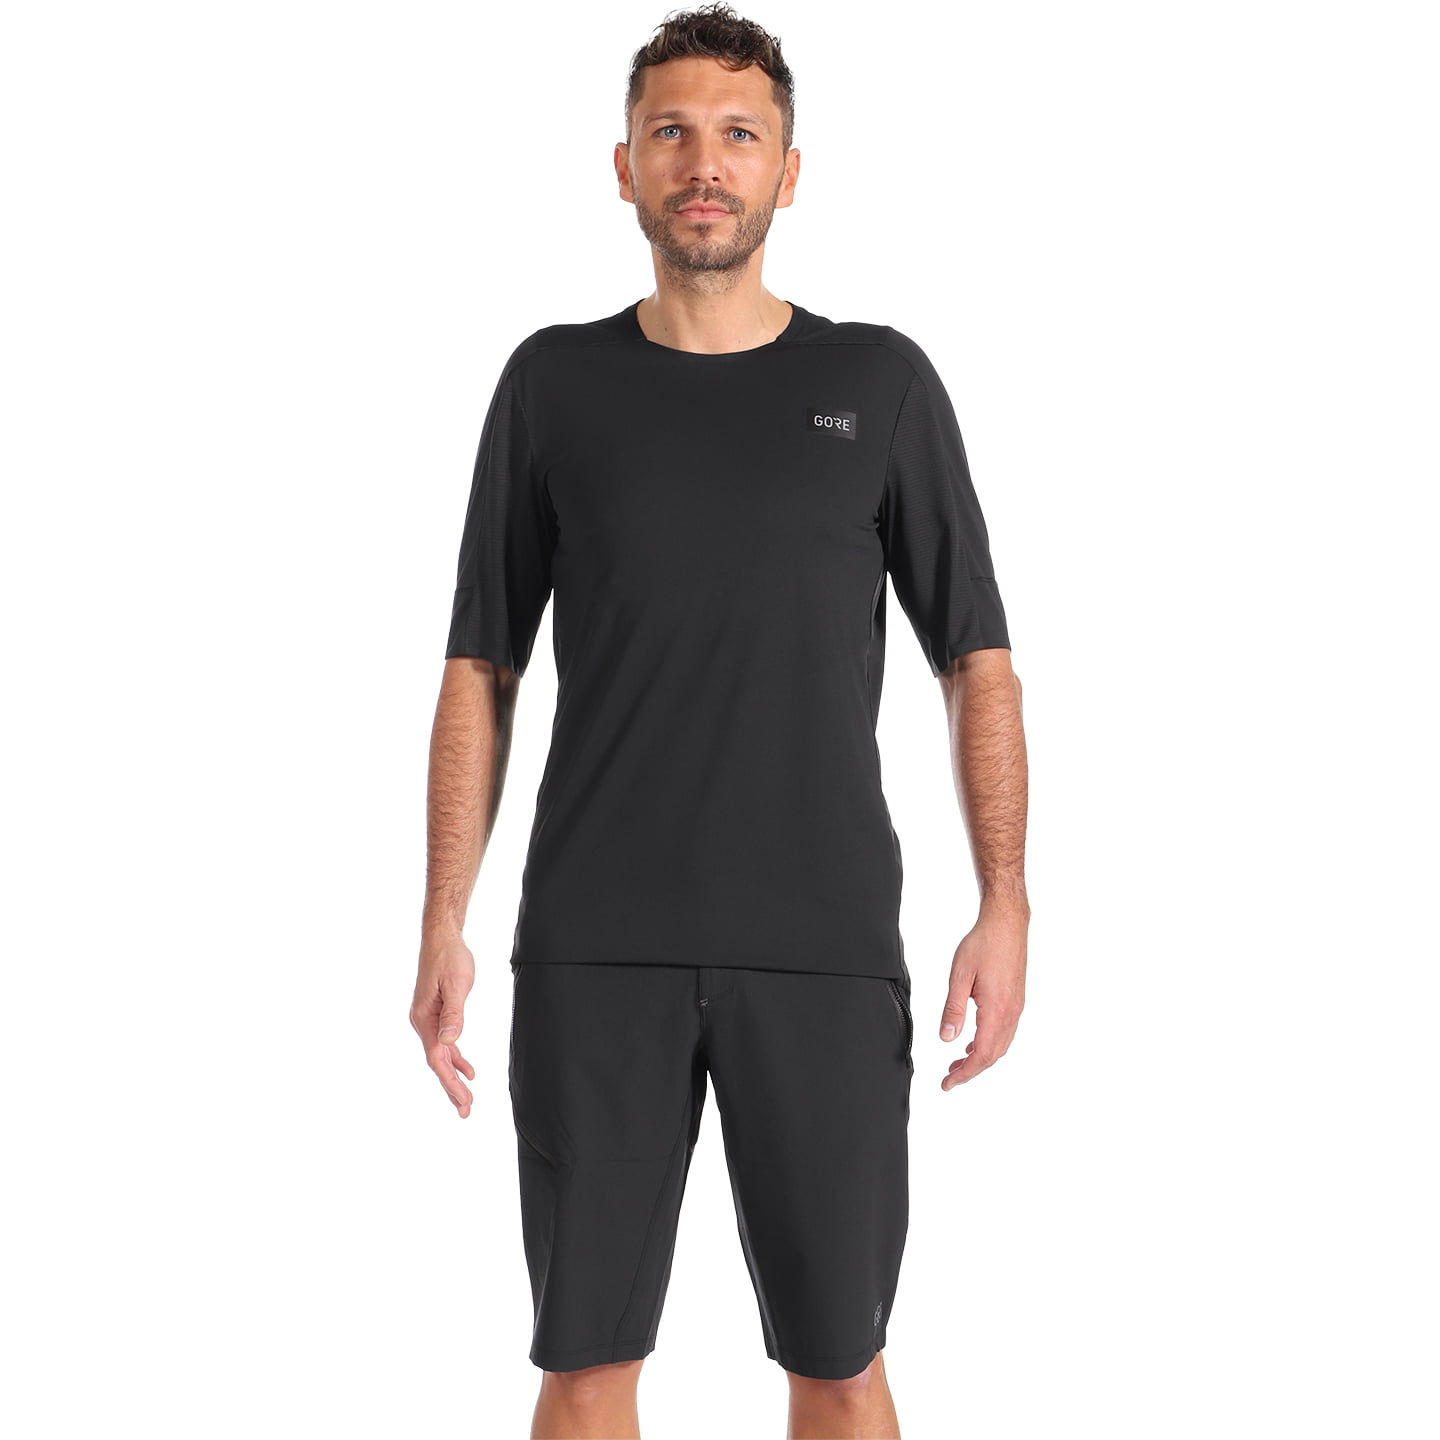 GORE WEAR TrailKPR Tech Set (cycling jersey + cycling shorts) Set (2 pieces), for men